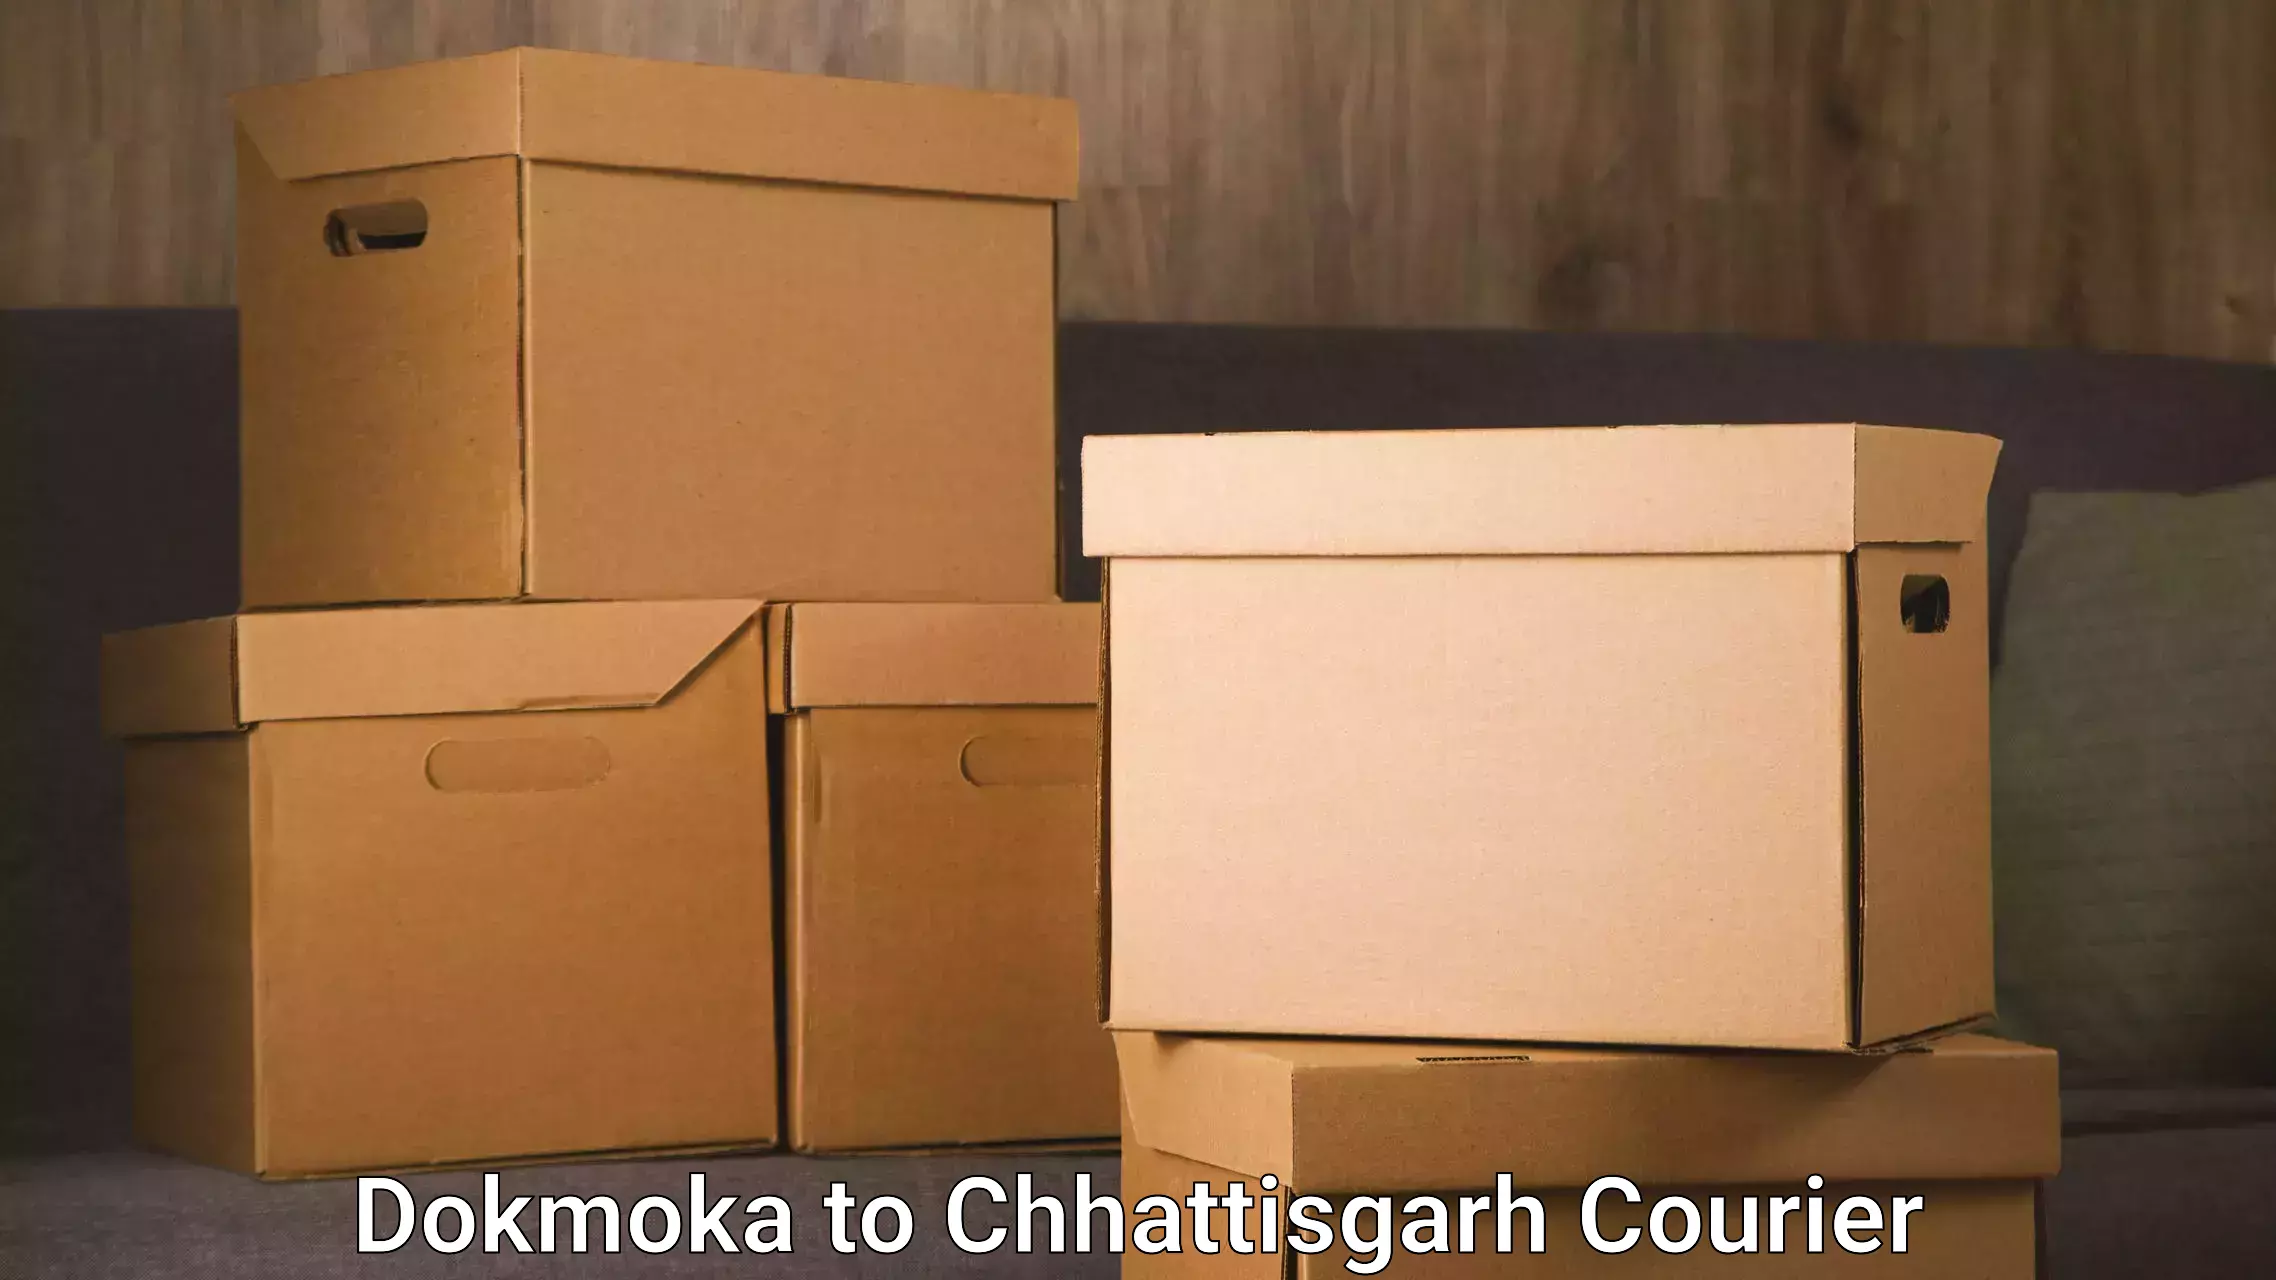 Professional courier handling Dokmoka to Chhattisgarh